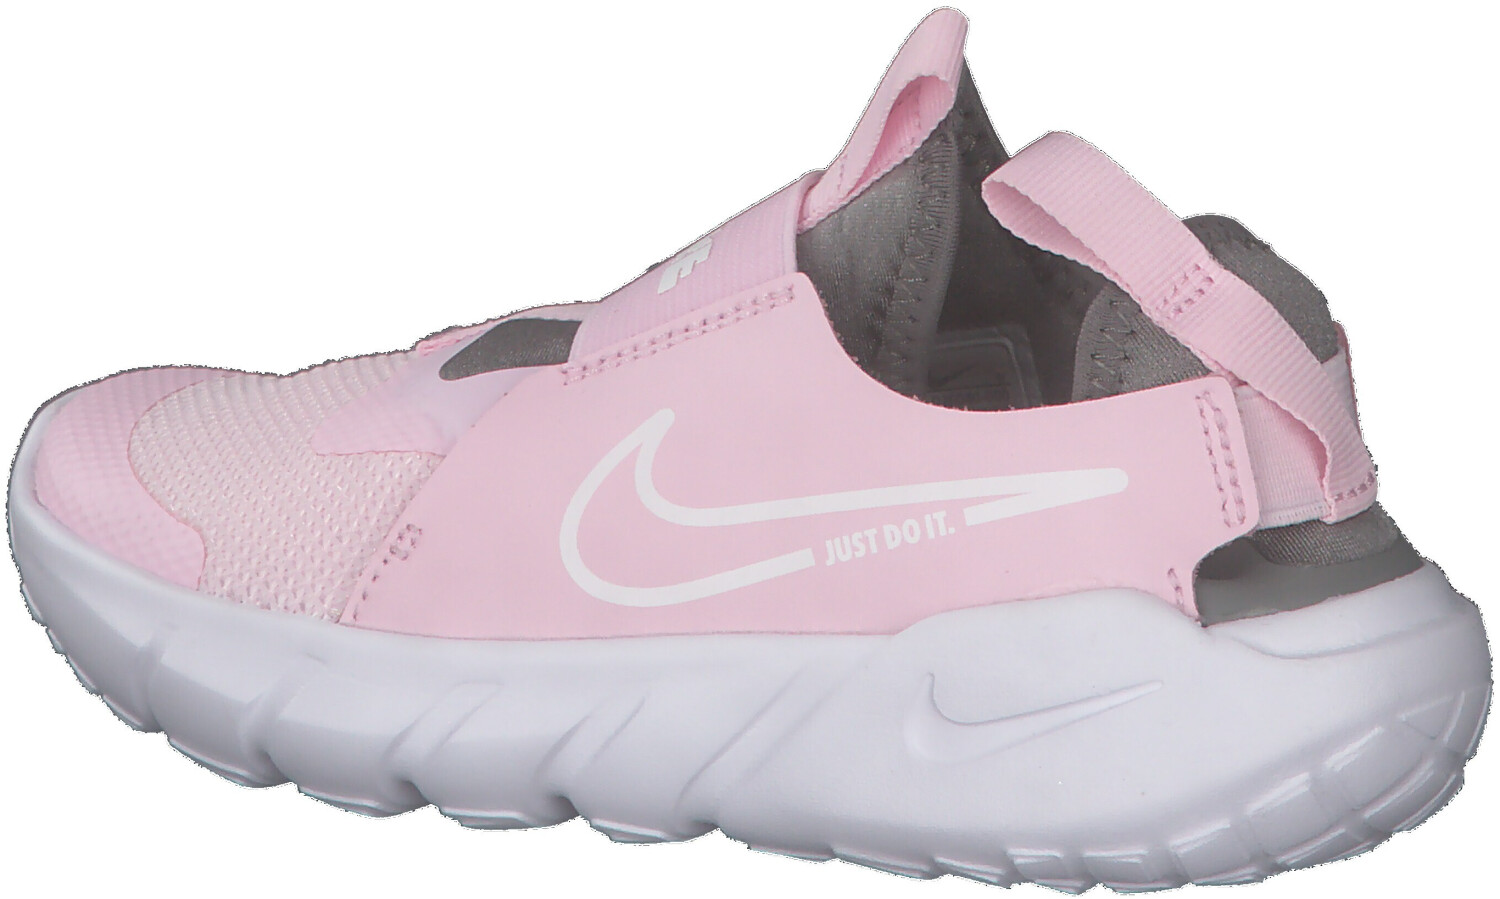 Nike Flex Runner 2 blue/white ab Kids € Preisvergleich foam/flat bei pink pewter/photo 27,99 